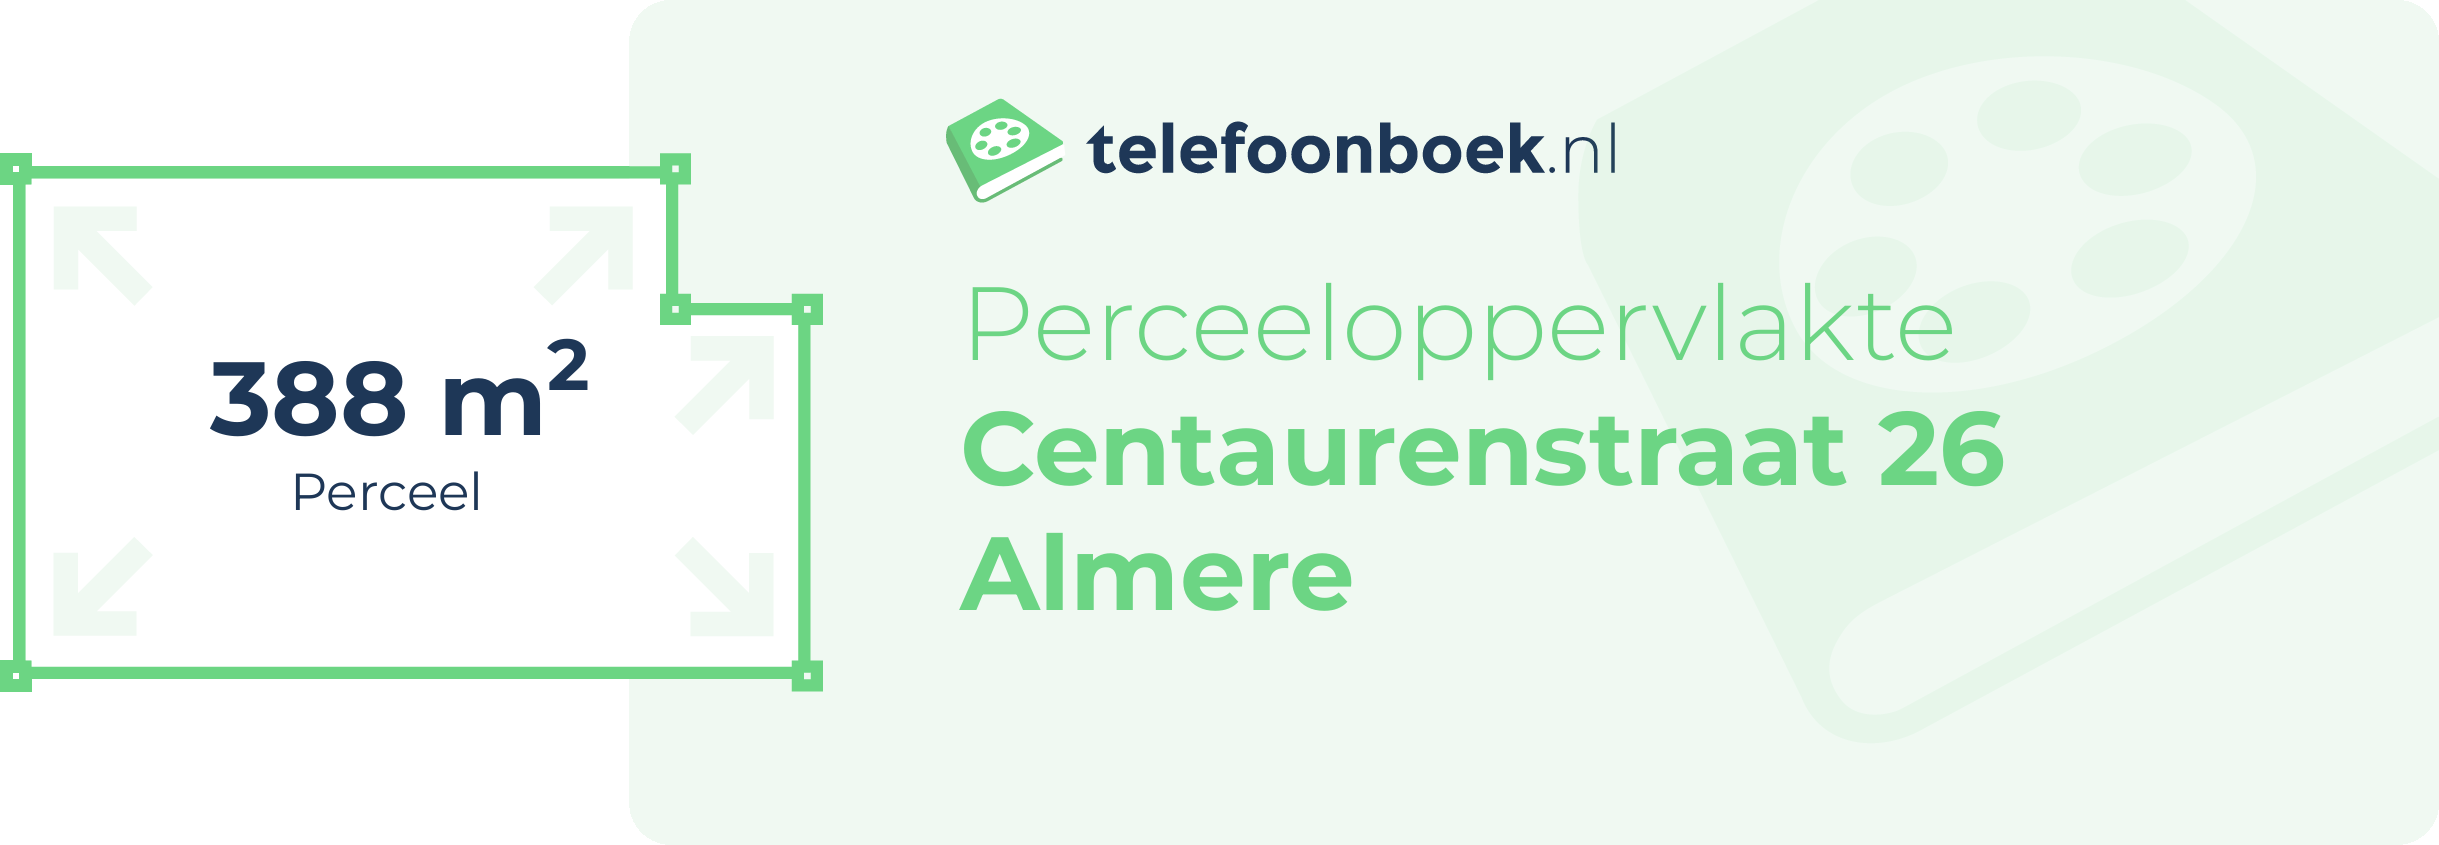 Perceeloppervlakte Centaurenstraat 26 Almere